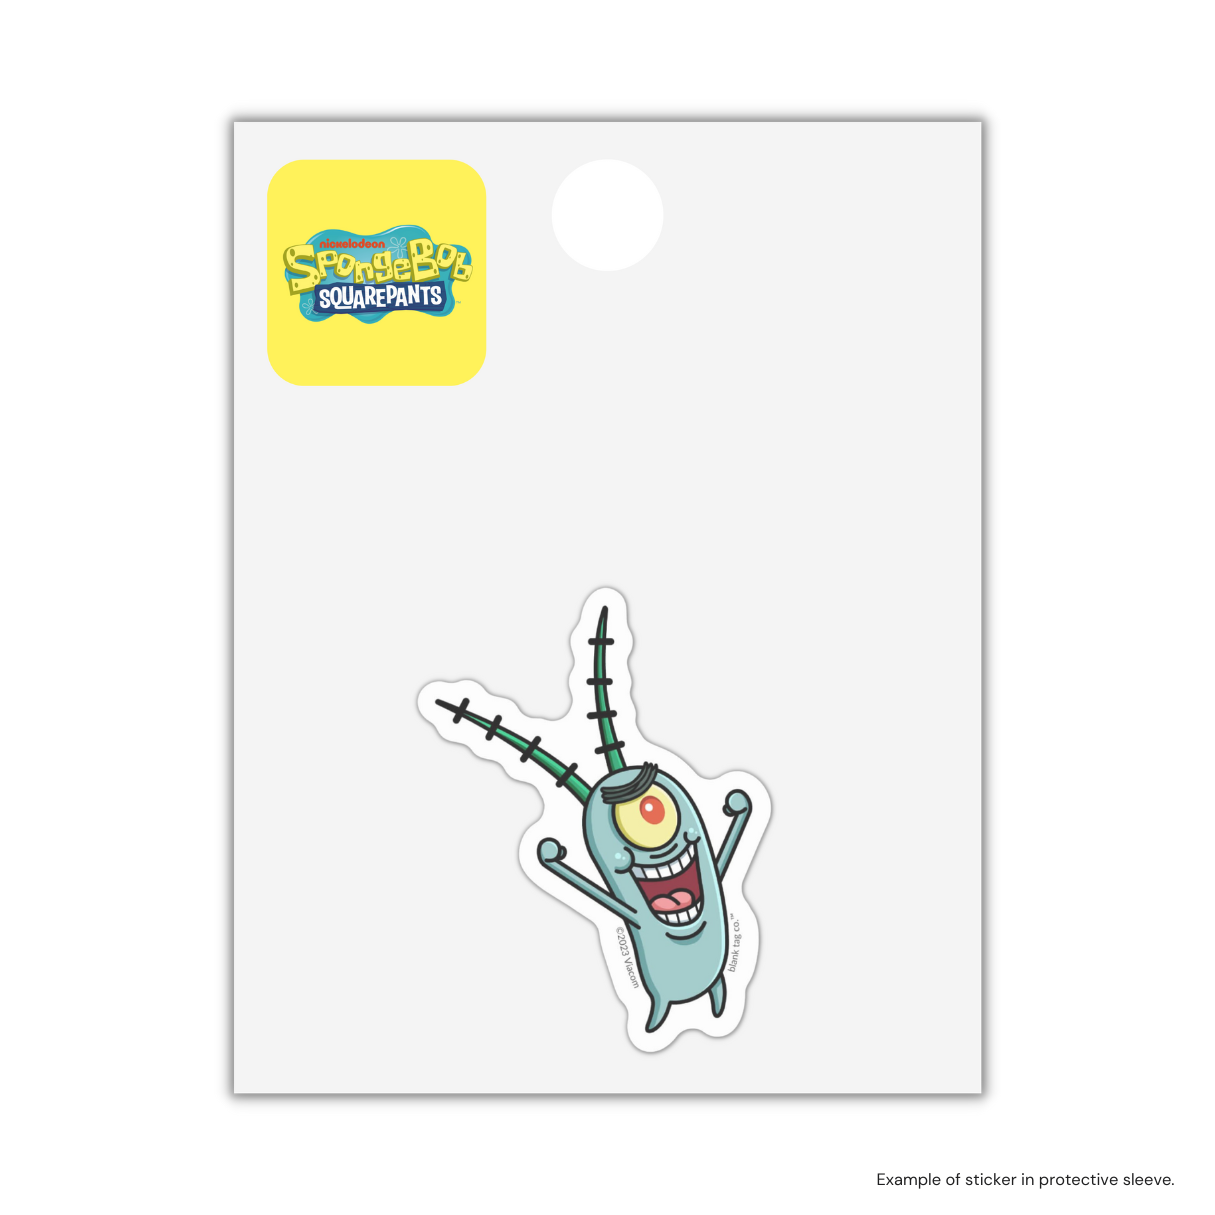 The Sheldon J. Plankton Sticker